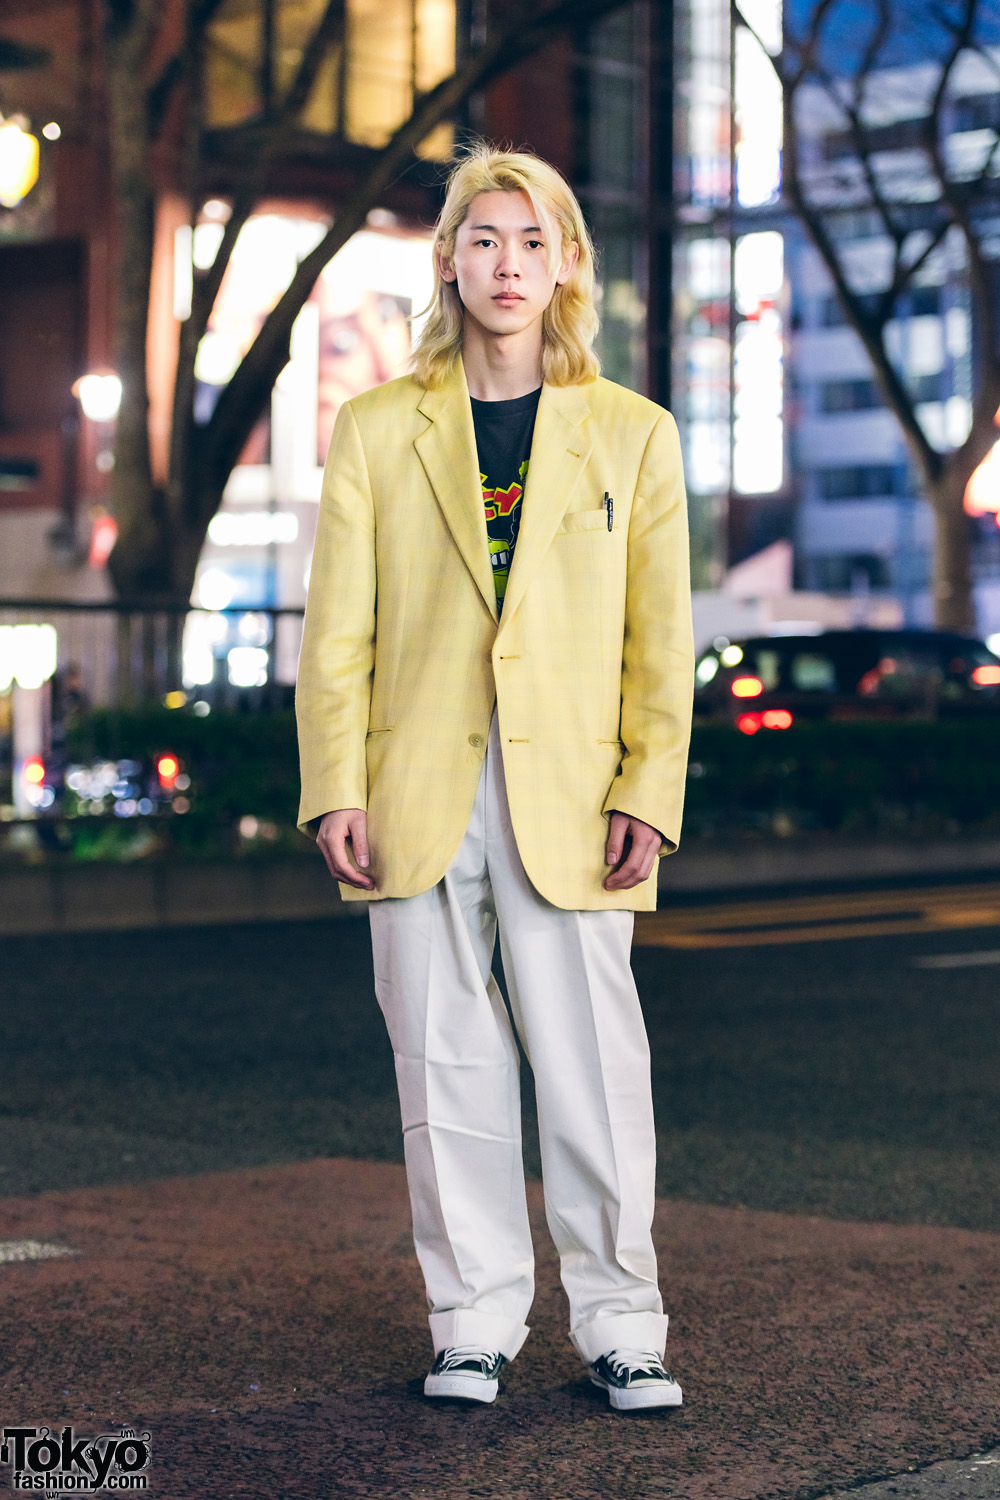 Japanese Hair Stylist in Harajuku Menswear Street Style w/ Blond Hair, Converse Sneakers & Zohreh Yellow Blazer